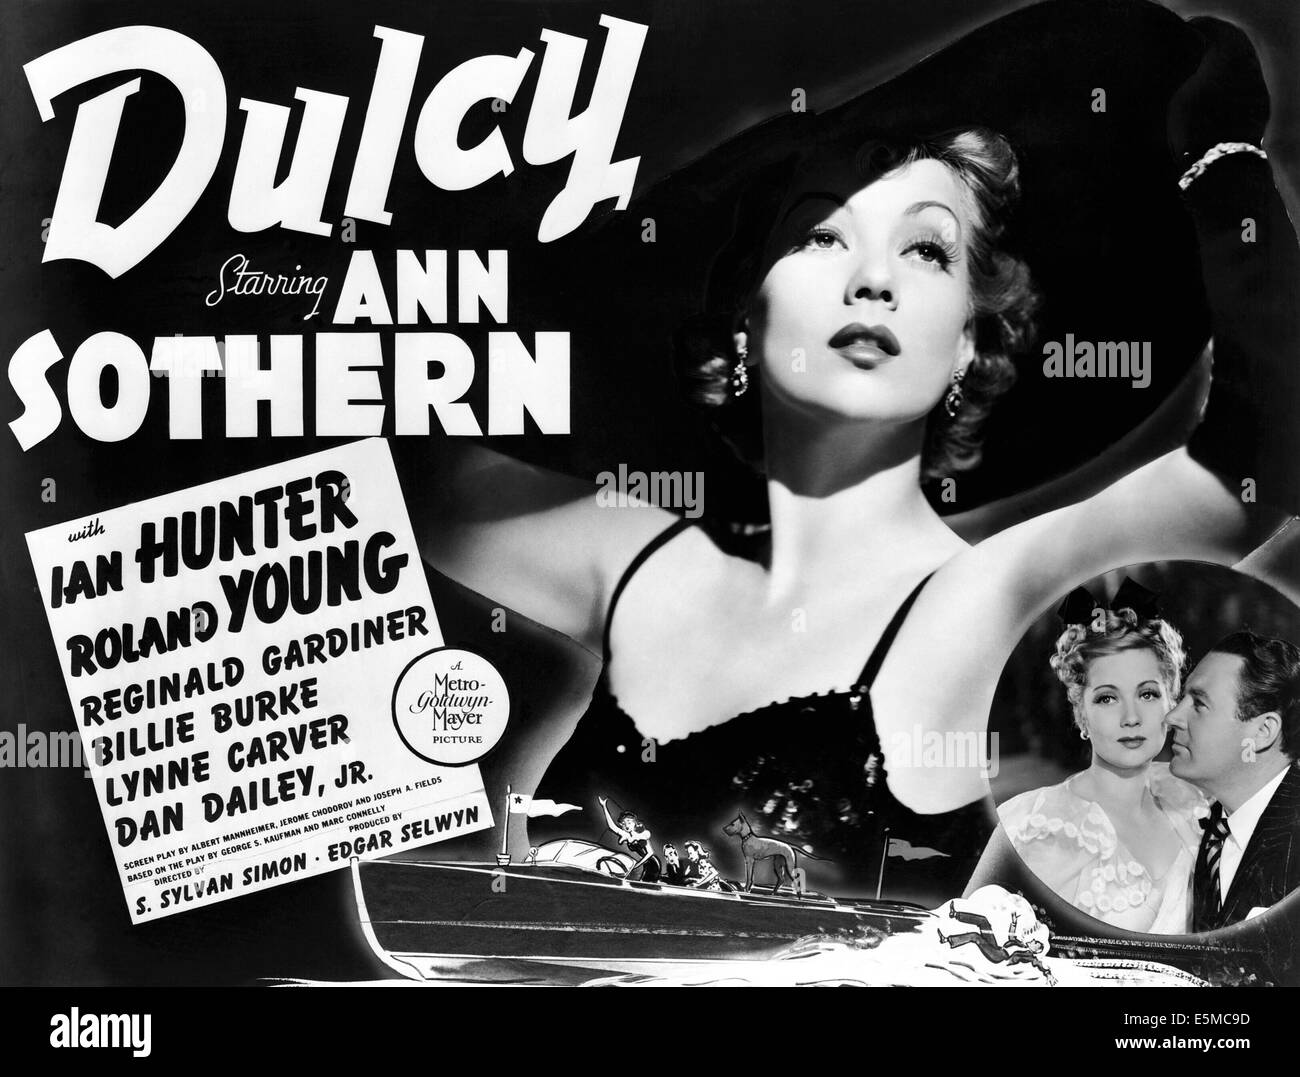 DULCY, Ann Sothern, Ian Hunter, 1940 Stockfoto